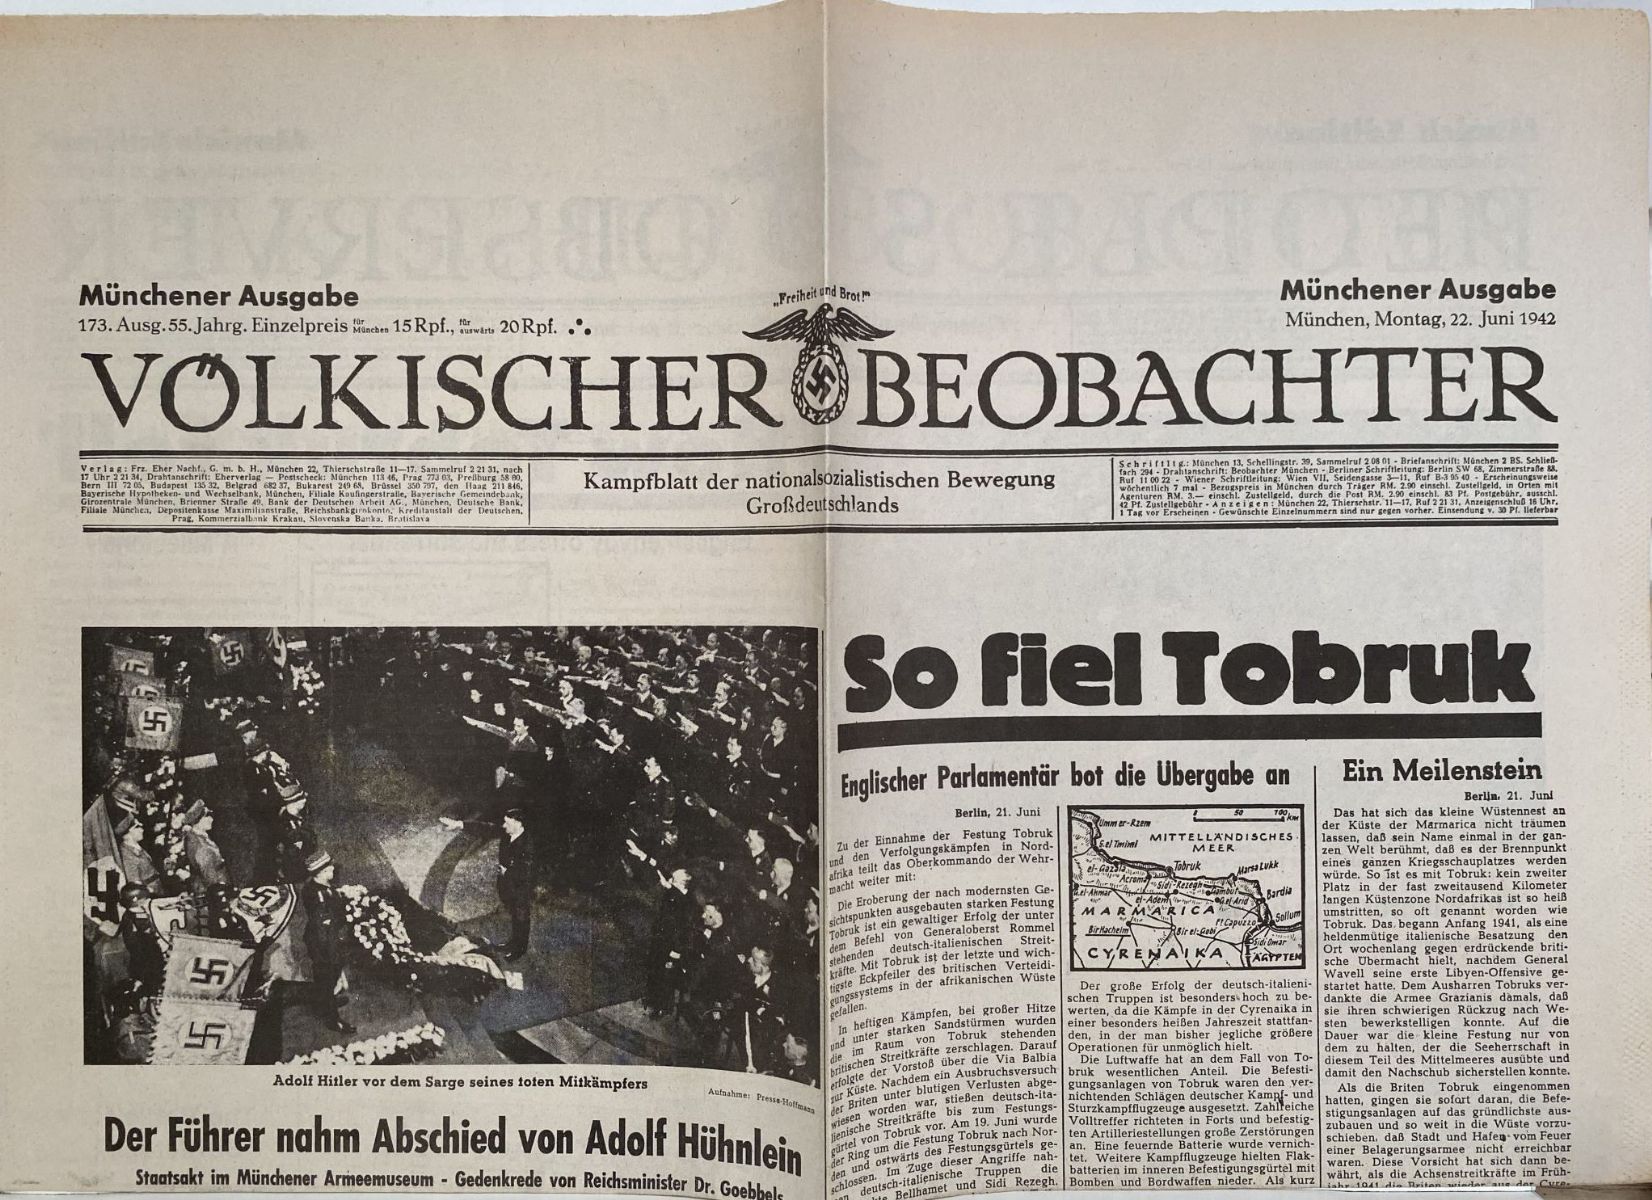 OLD WARTIME NEWSPAPER: Volkischer Beobachter, Monday 22nd June 1942